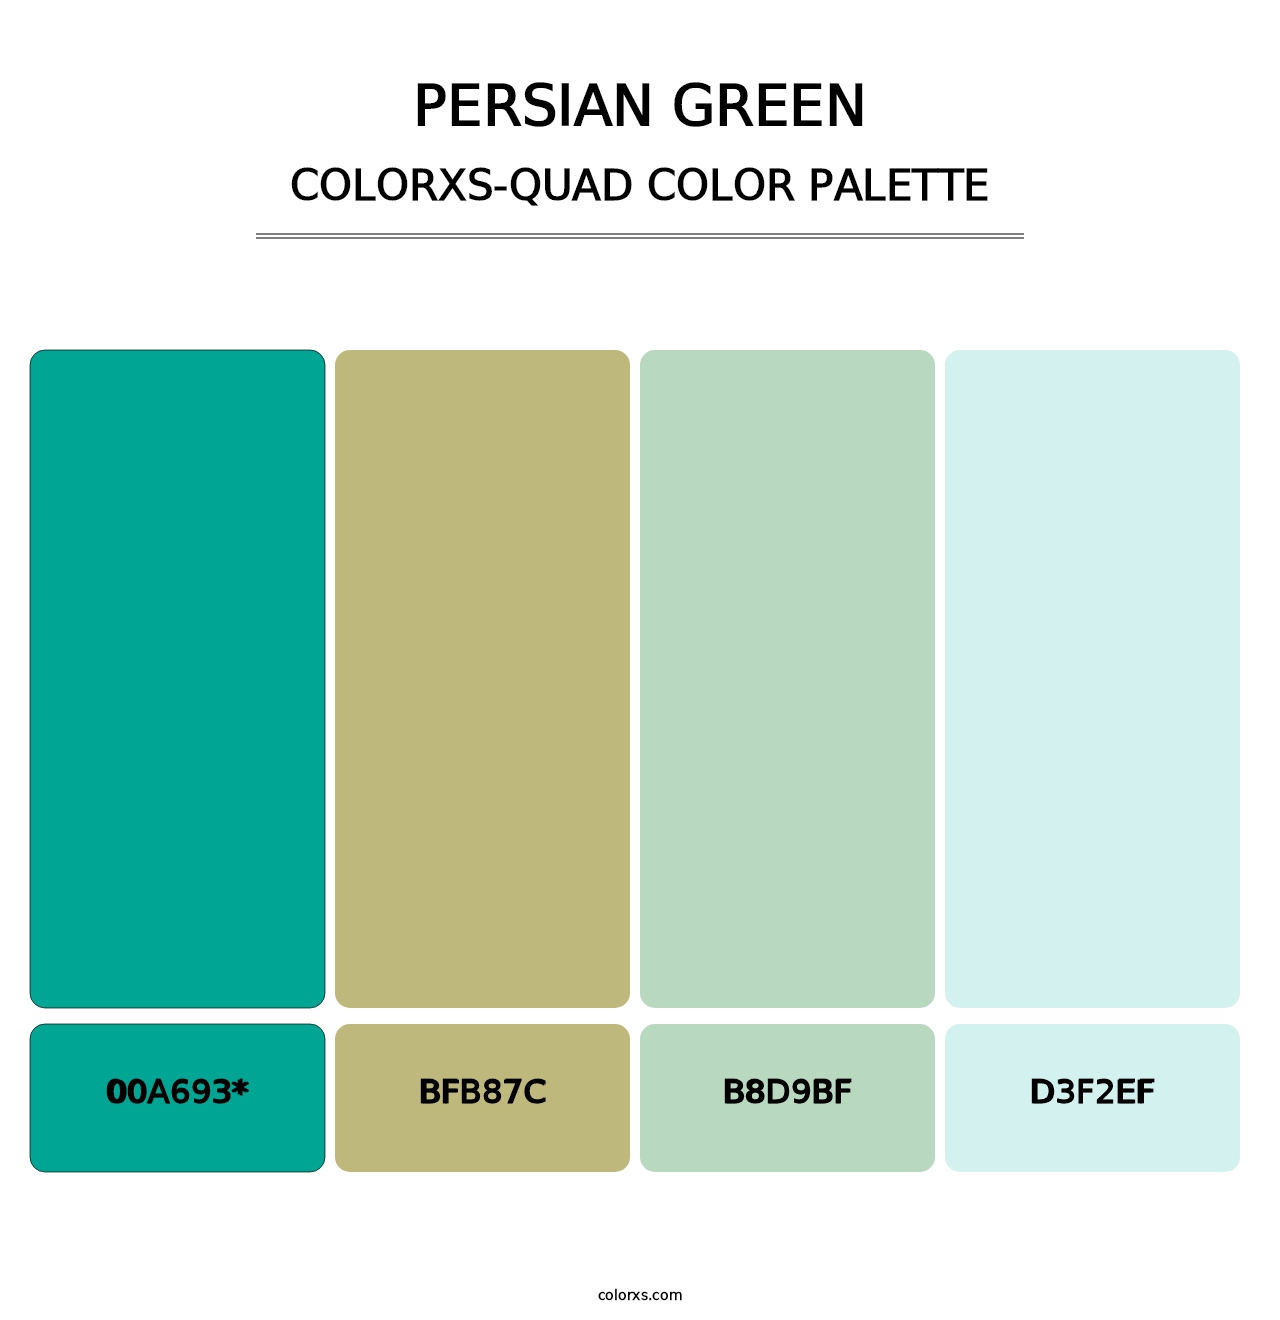 Persian Green - Colorxs Quad Palette